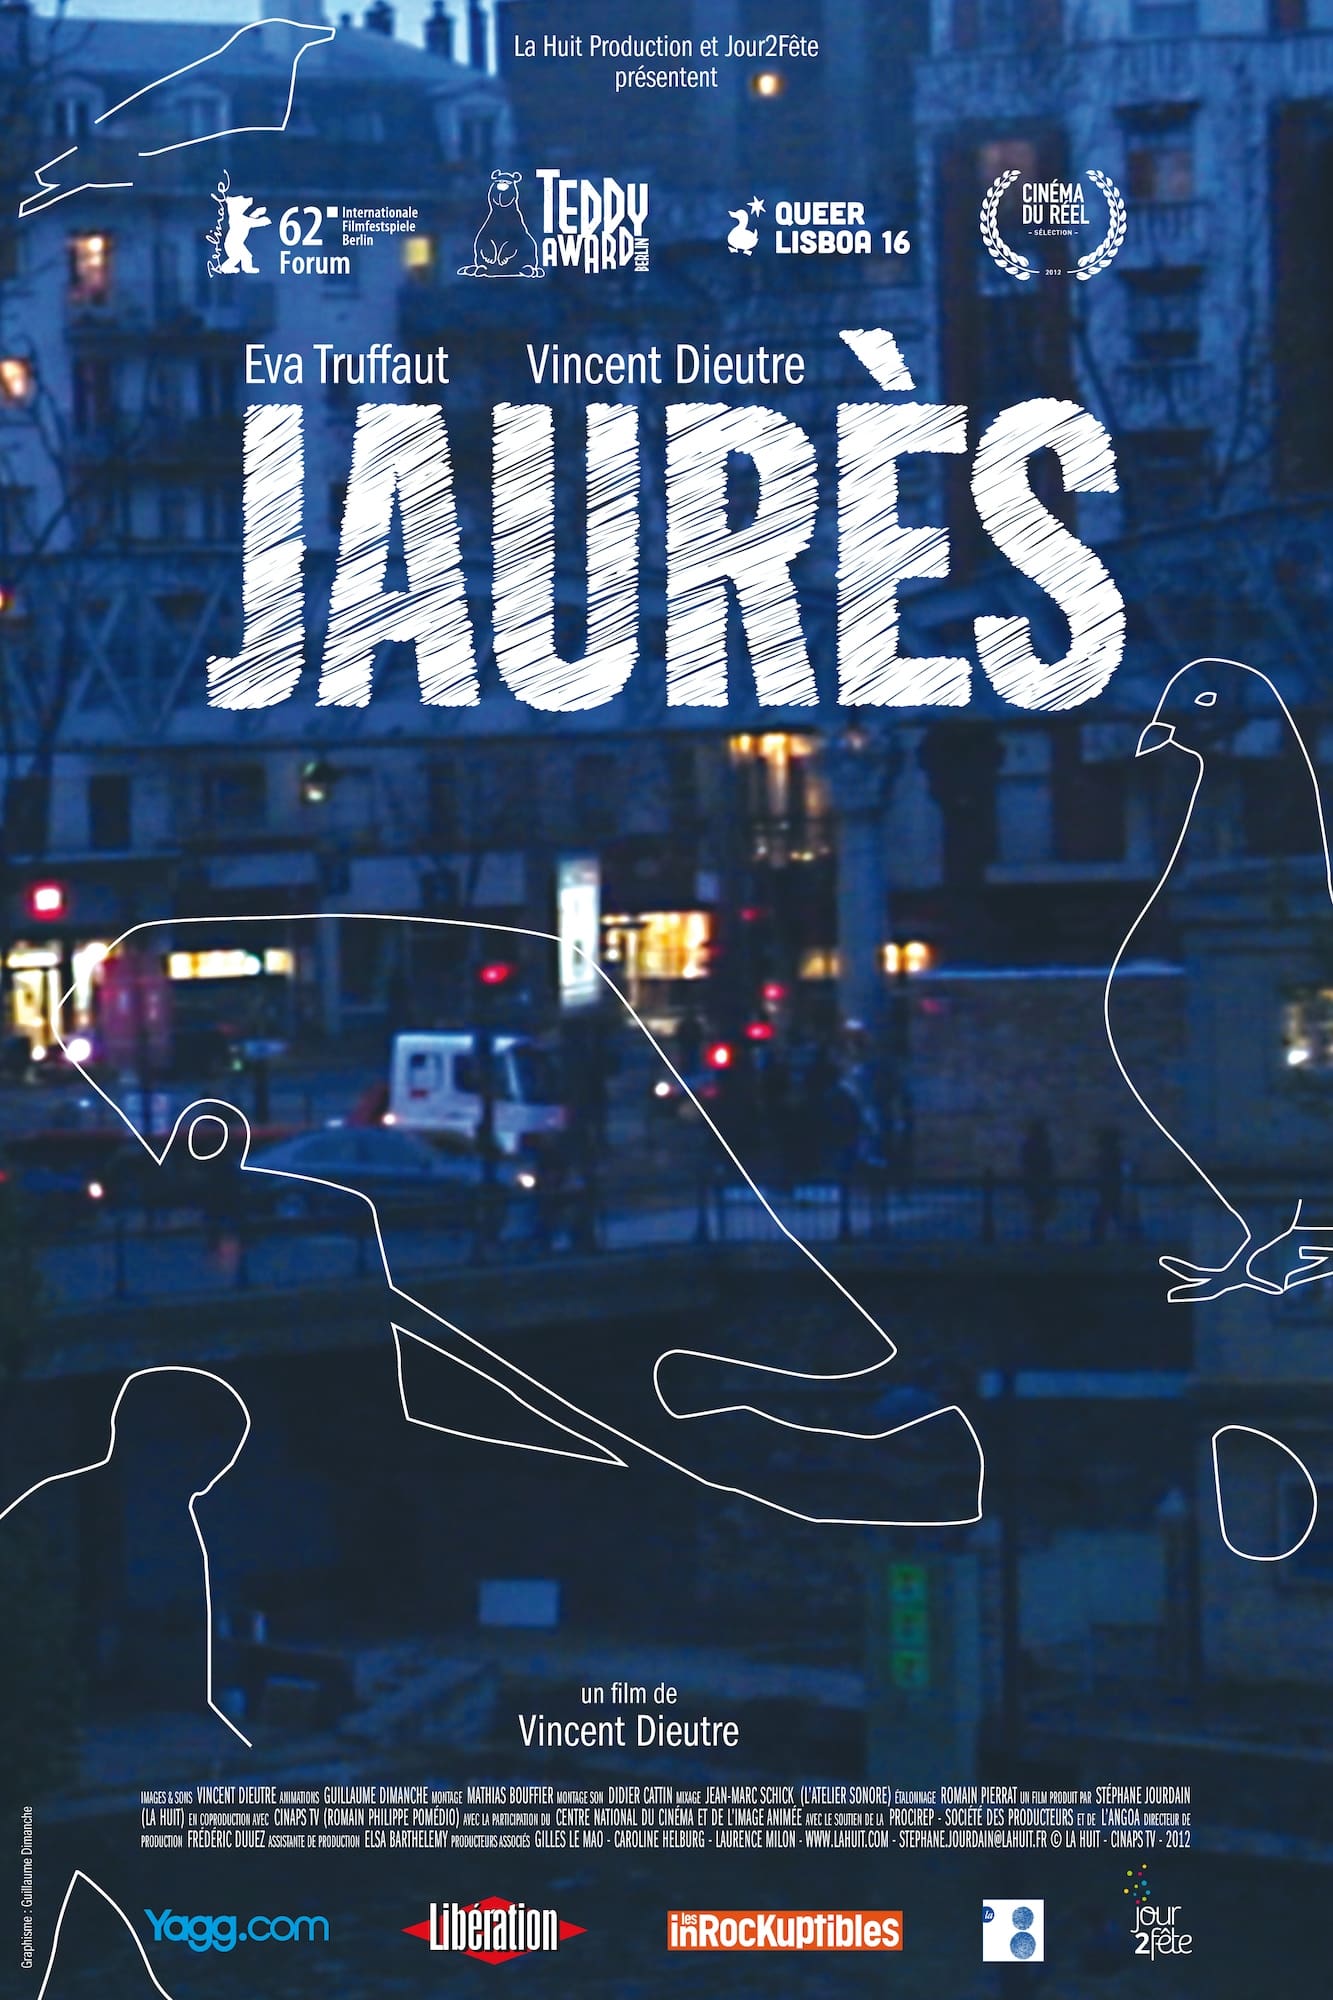 Jaurès (2012)